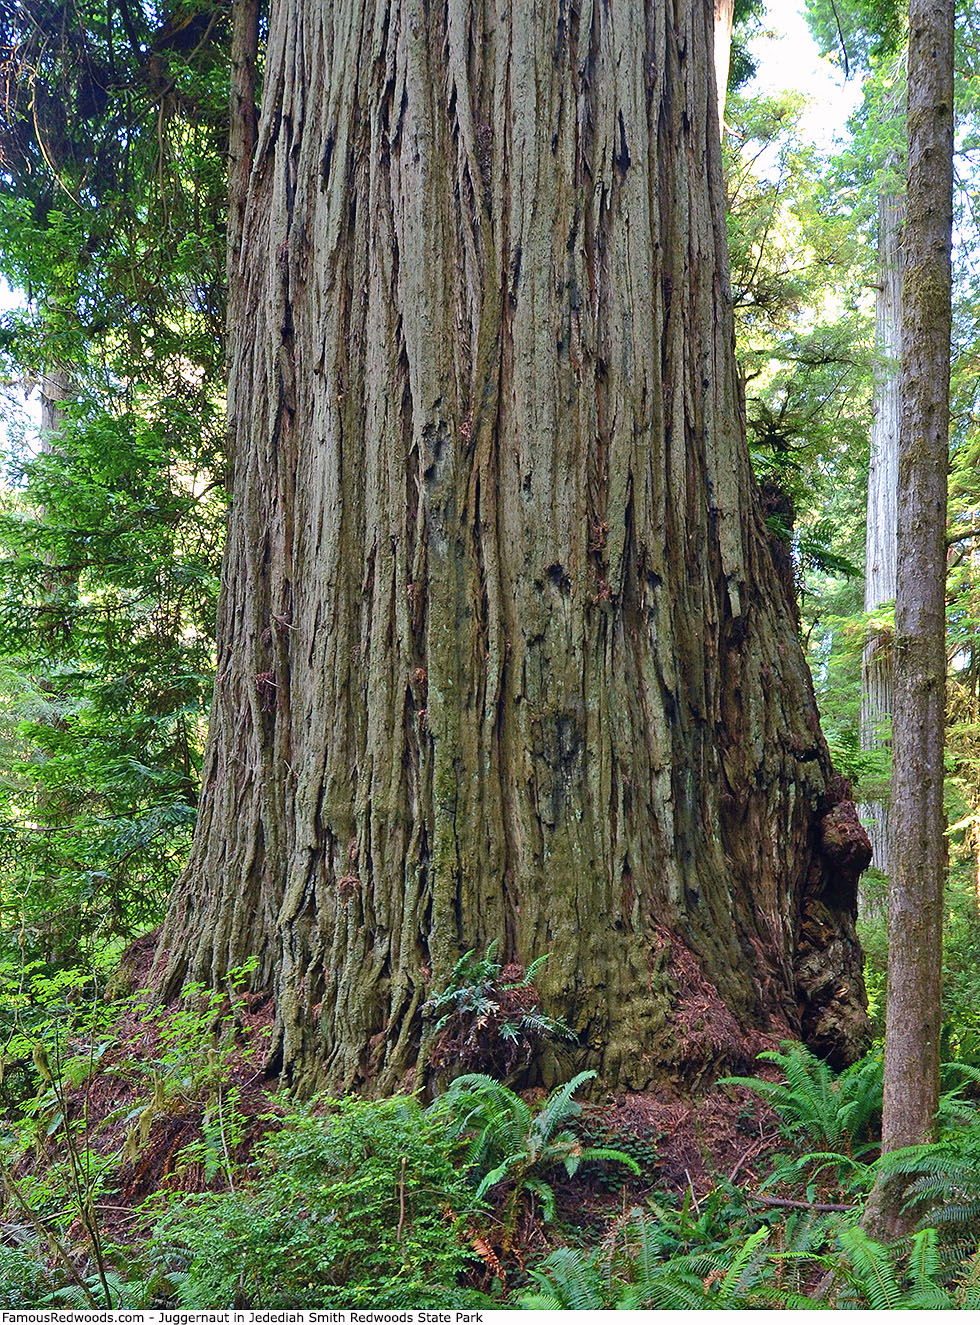 Jedediah Smith Redwoods State Park - Juggernaut Tree/Grogan's Fault Tree/Spartan Tree